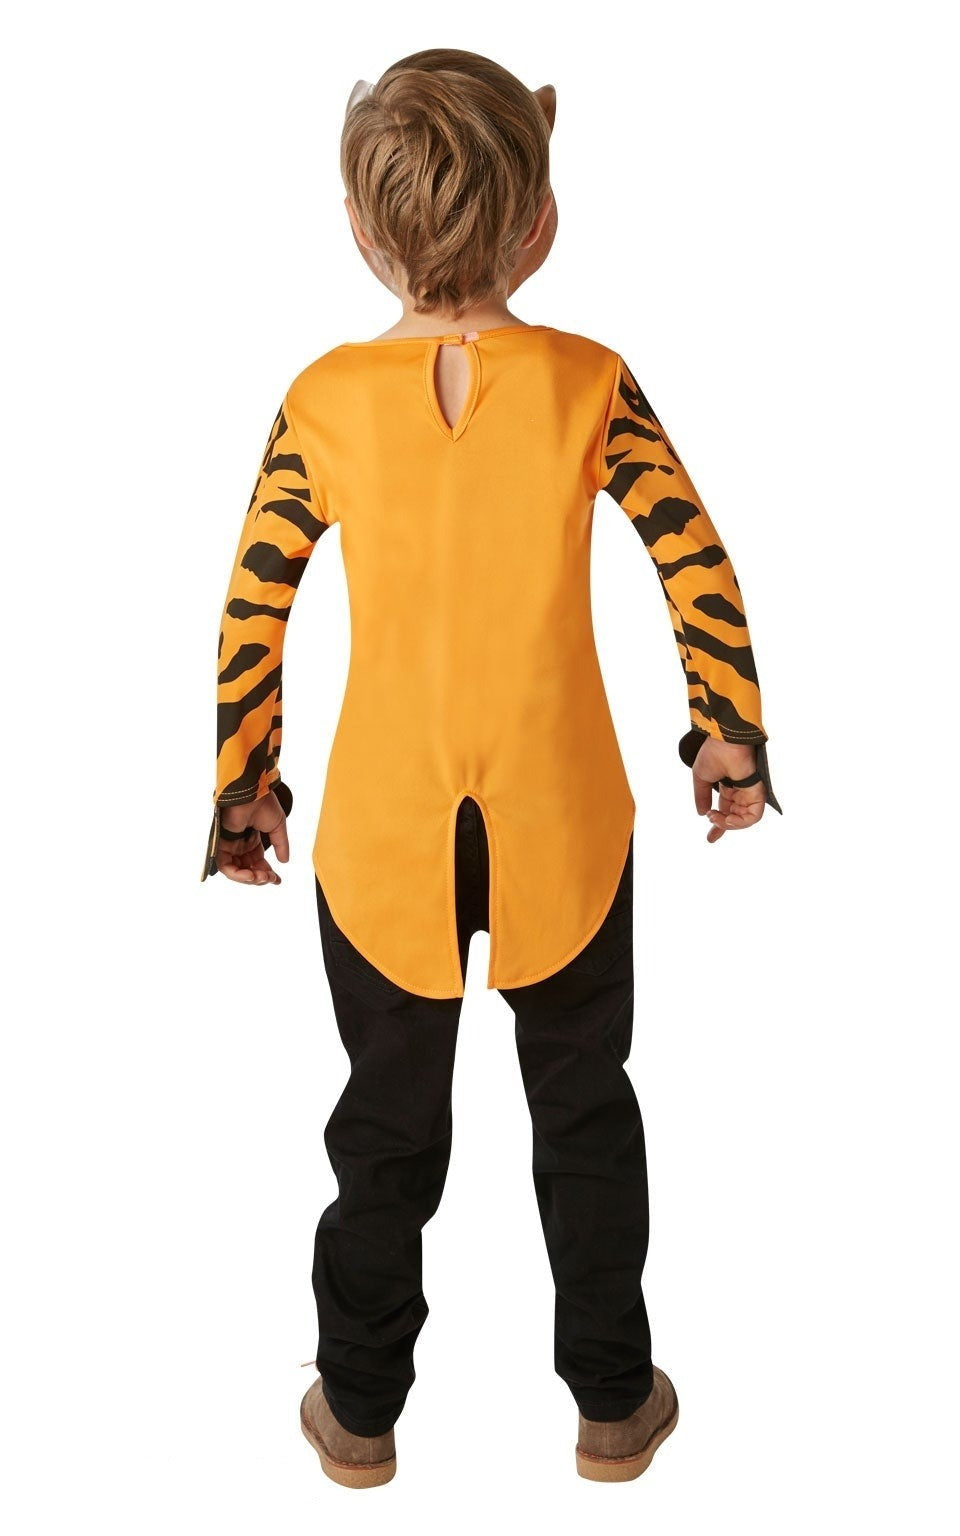 Mr. Tiger Costume_2 